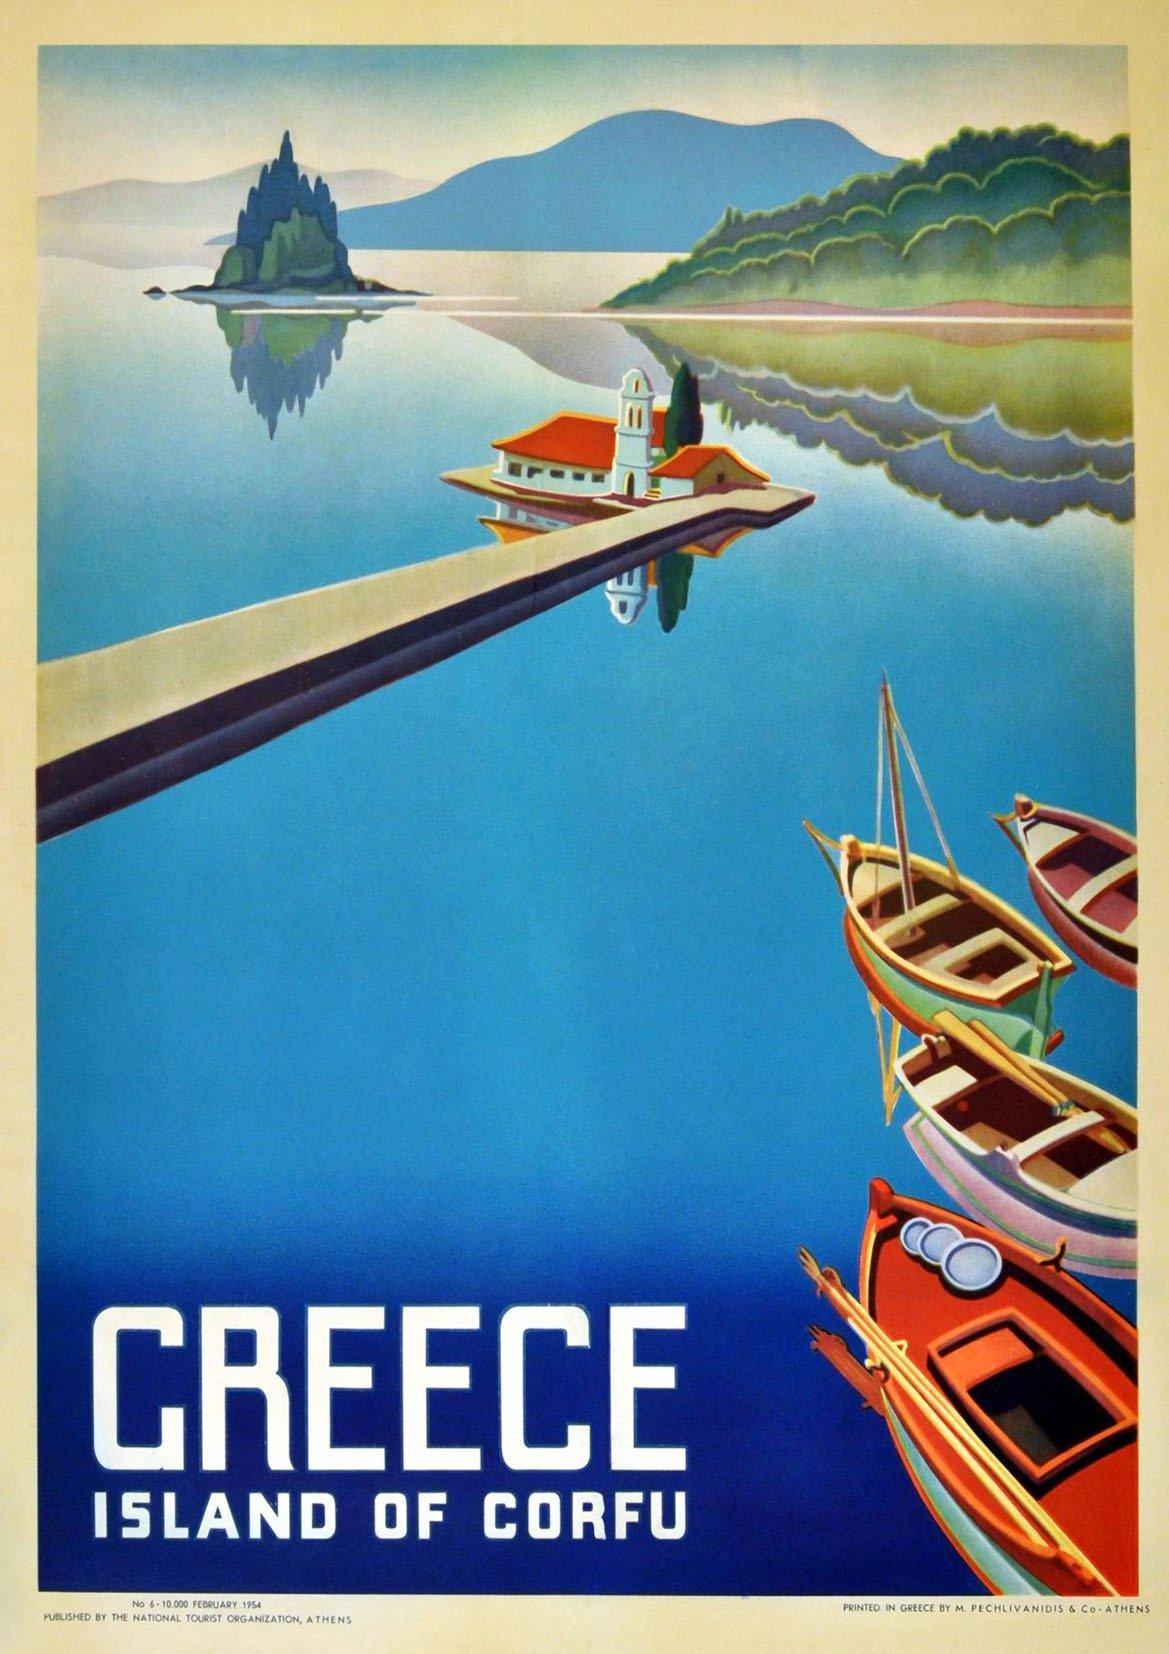 CORFU TOURISM POSTER: Vintage Greek Island Travel Advert Print - Pimlico Prints